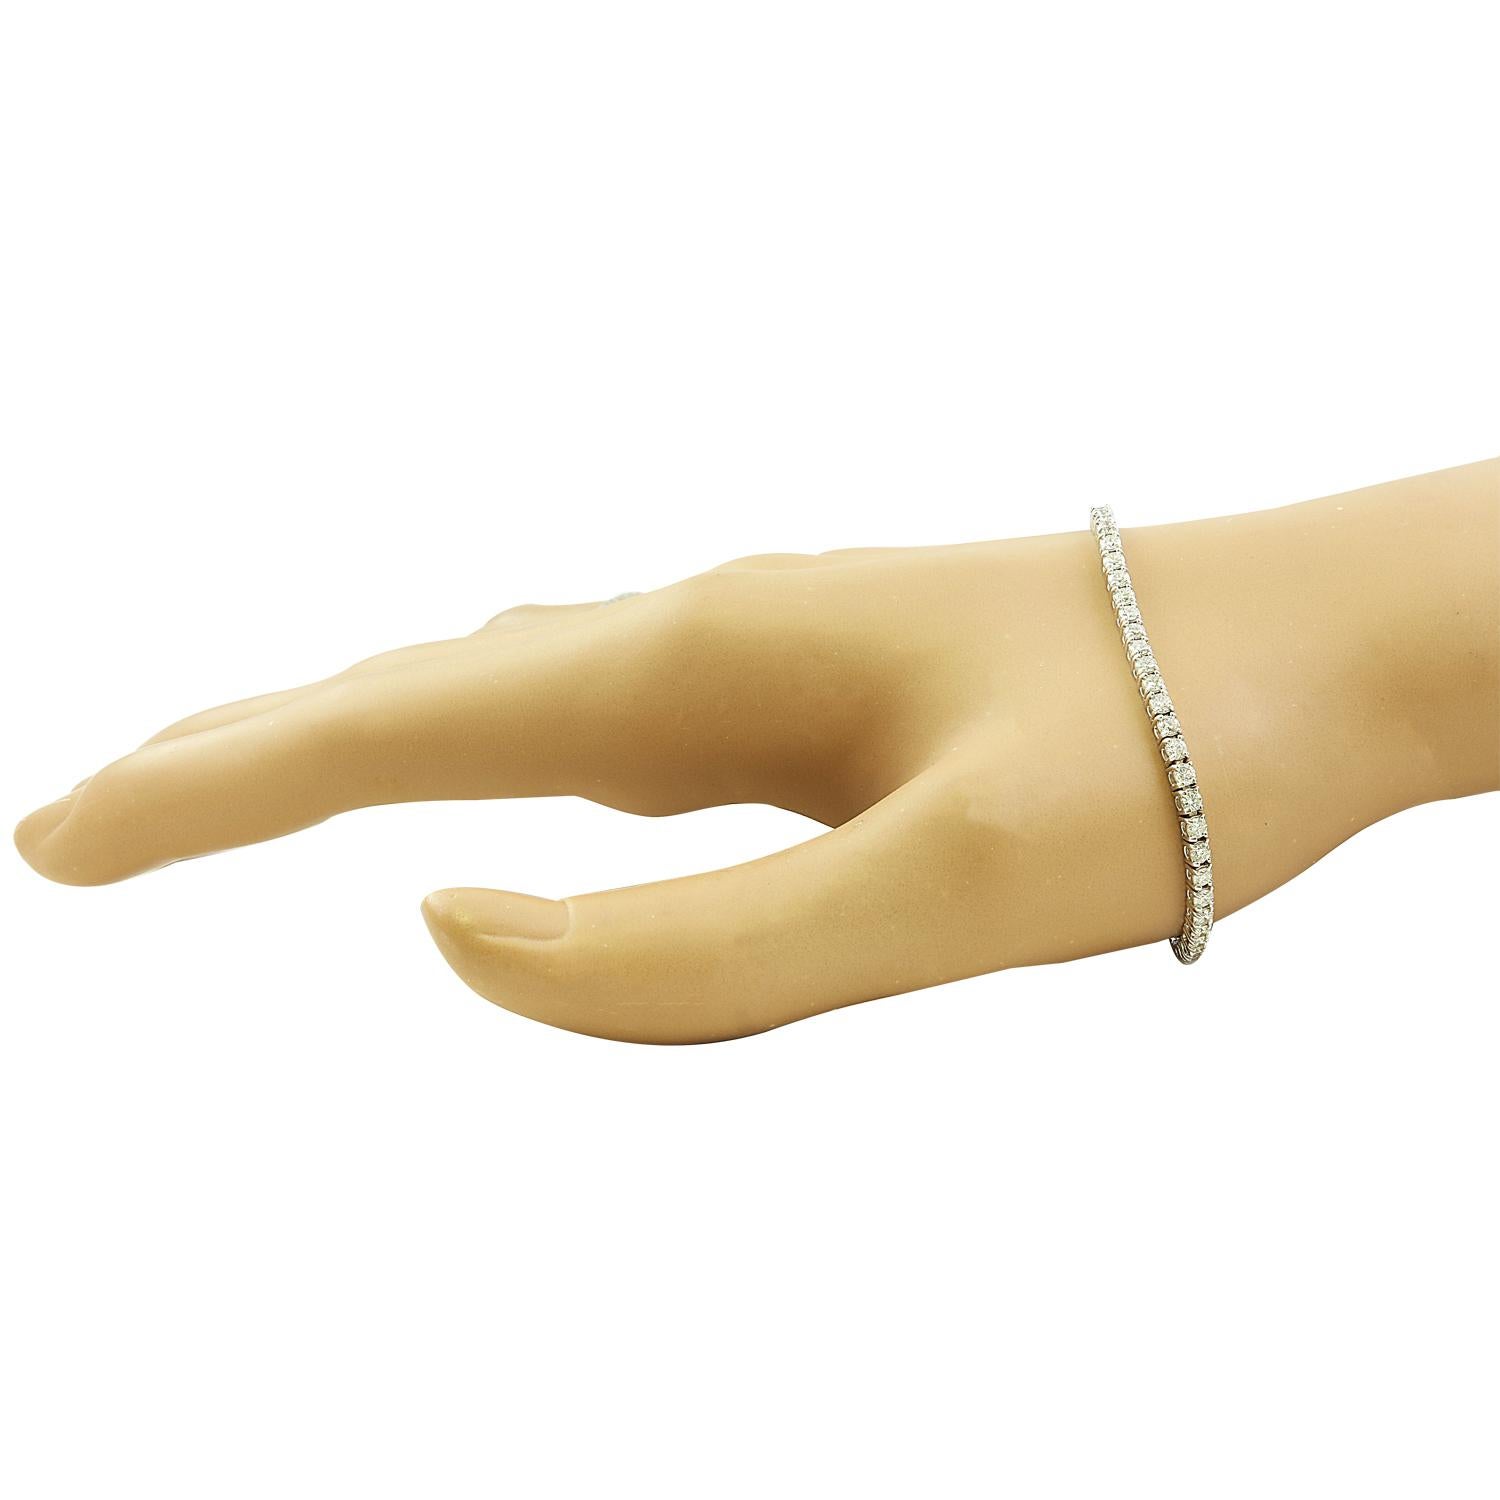 3.35 Carat Natural Diamond 14 Karat Solid White Gold Diamond Bracelet
Stamped: 14K 
Total Bracelet Weight: 7.6 Grams
Bracelet Length: 7 Inches 
Diamond Weight: 3.55 Carat (F-G Color, VS2-SI1 Clarity )
Face Measures: 2.40 Millimeters
SKU: [600507]